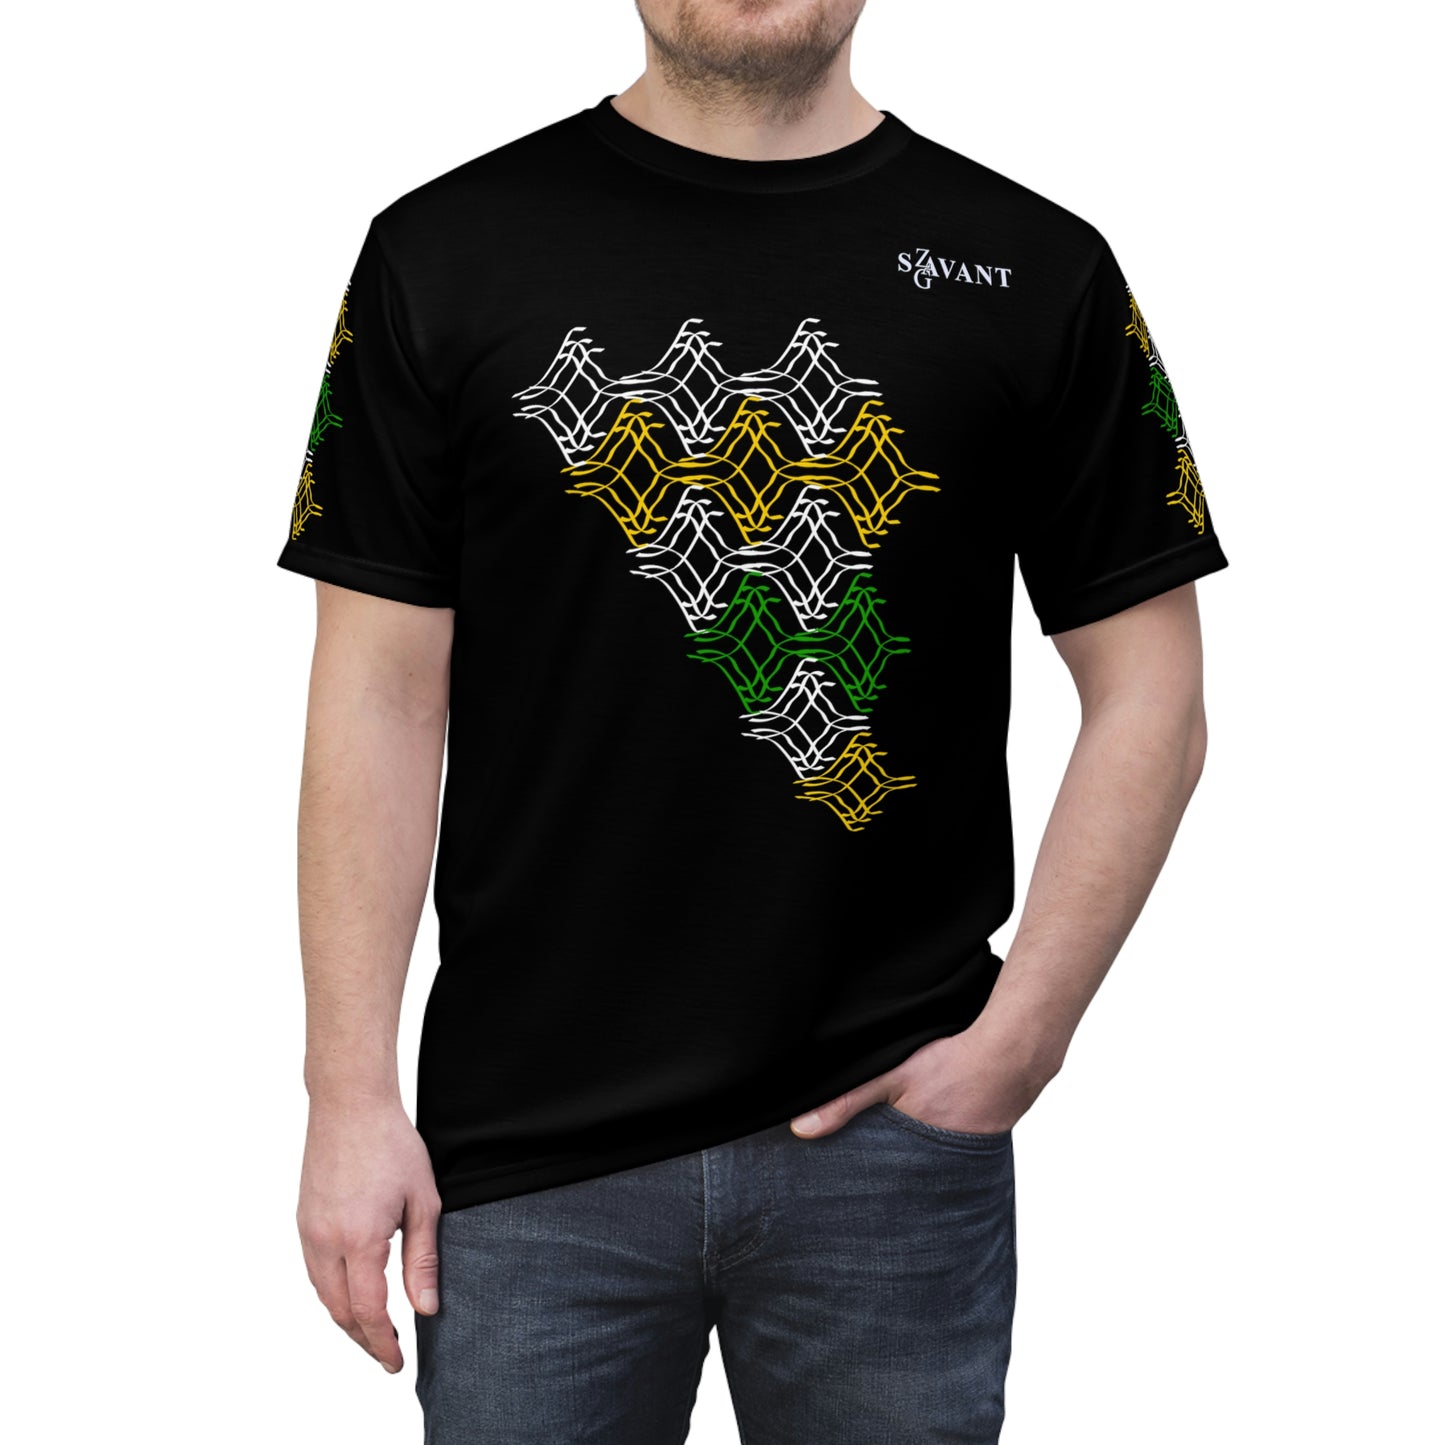 Men’s Cut & Sew Graphic T-shirt - Black with JA Colors